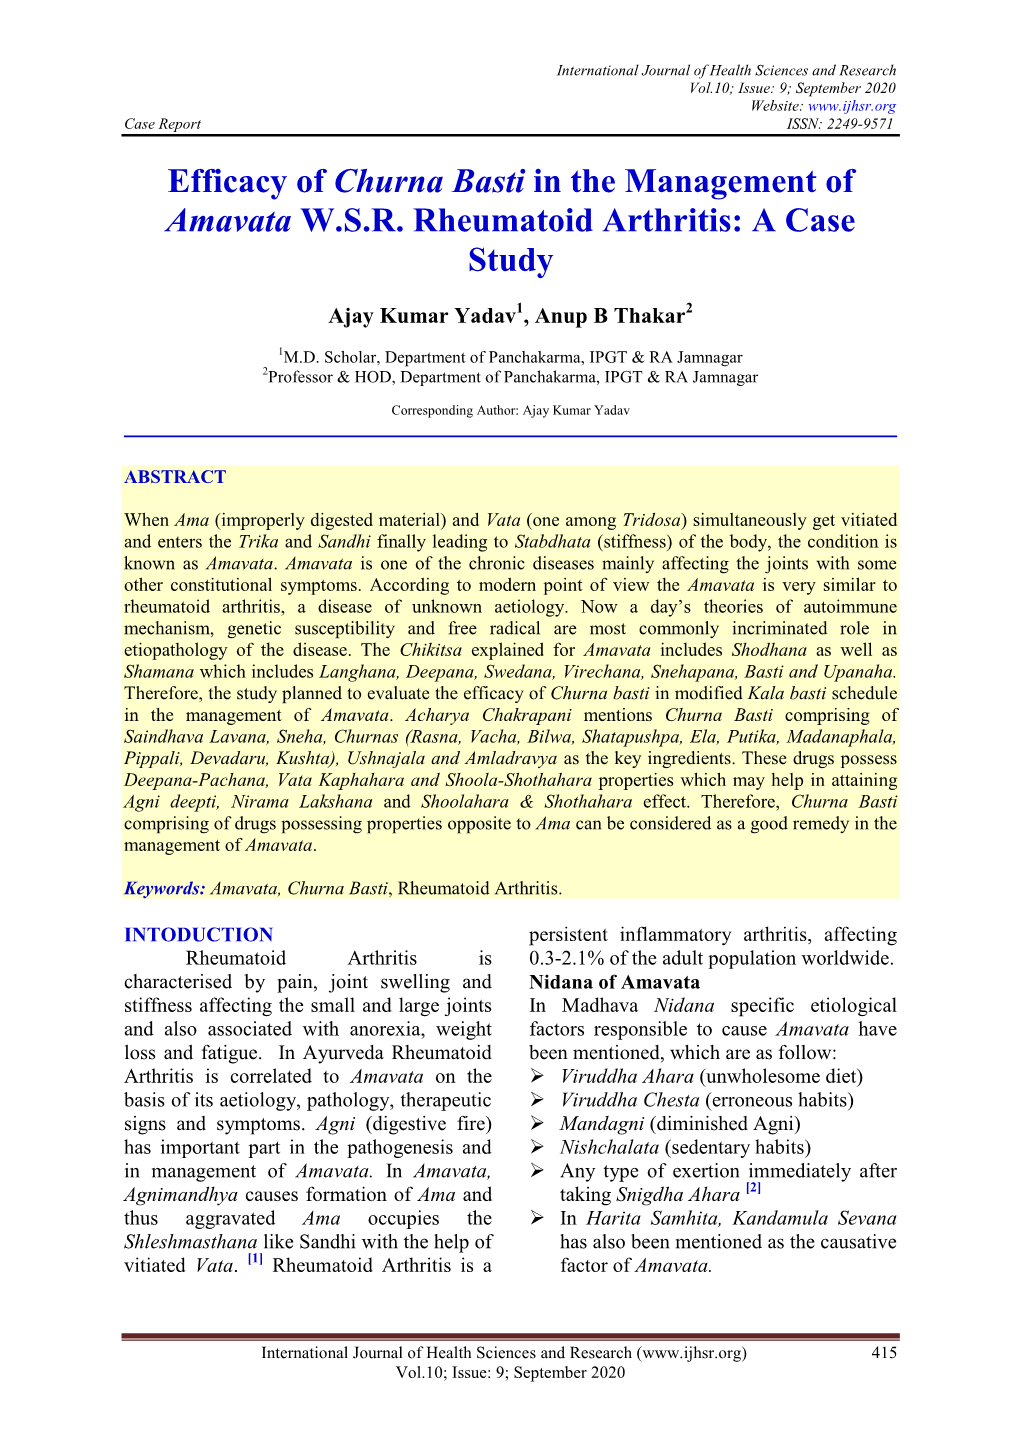 Efficacy of Churna Basti in the Management of Amavata W.S.R. Rheumatoid Arthritis: a Case Study